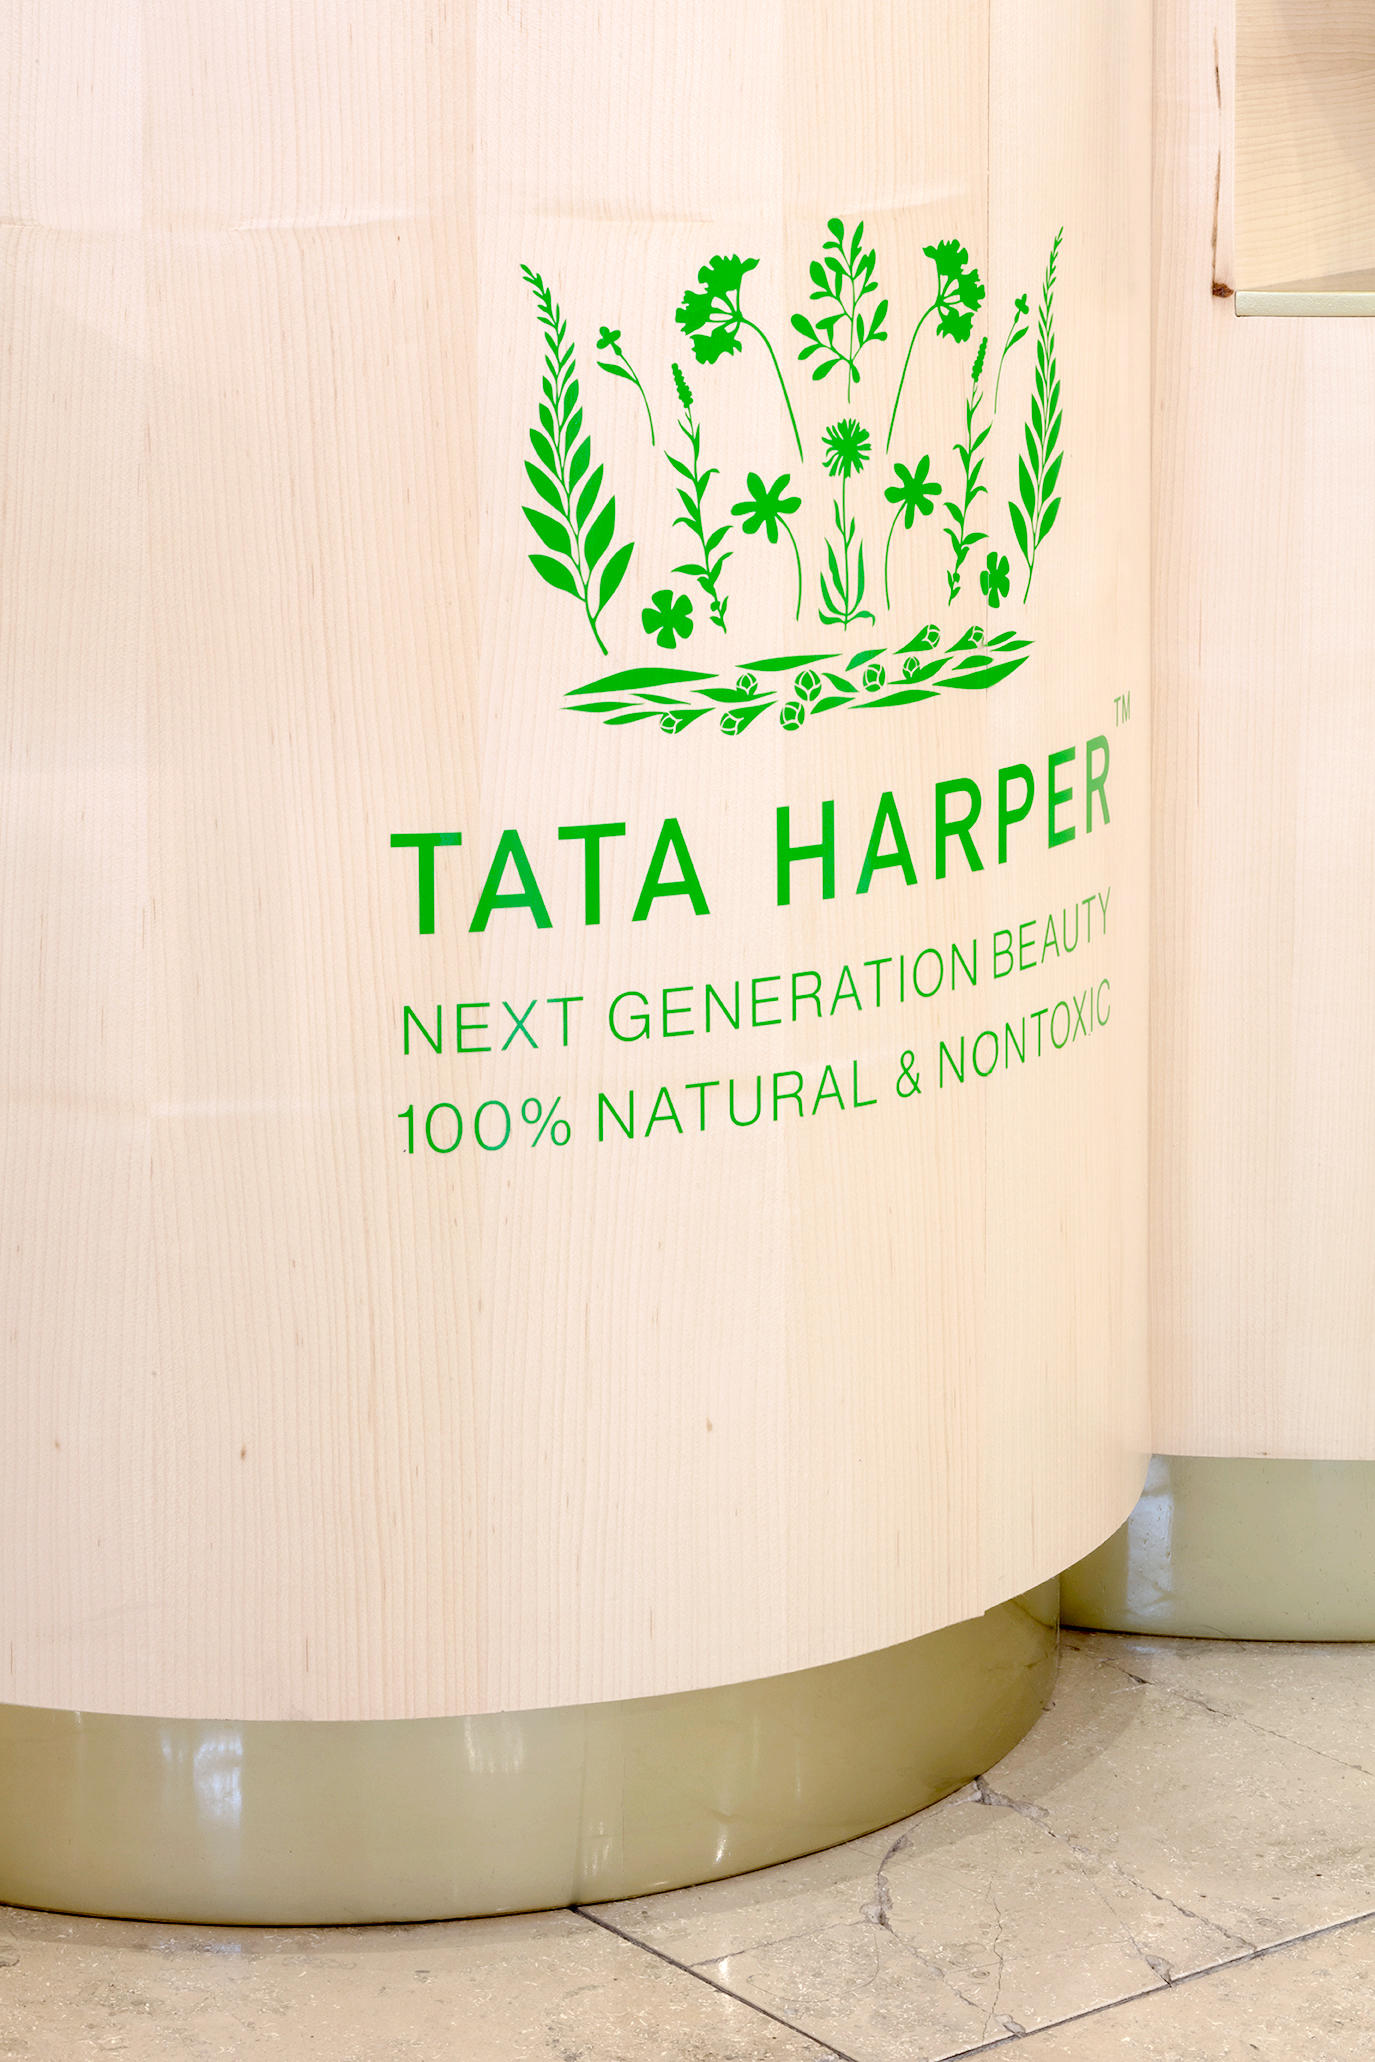 Tata Harper by FormRoom